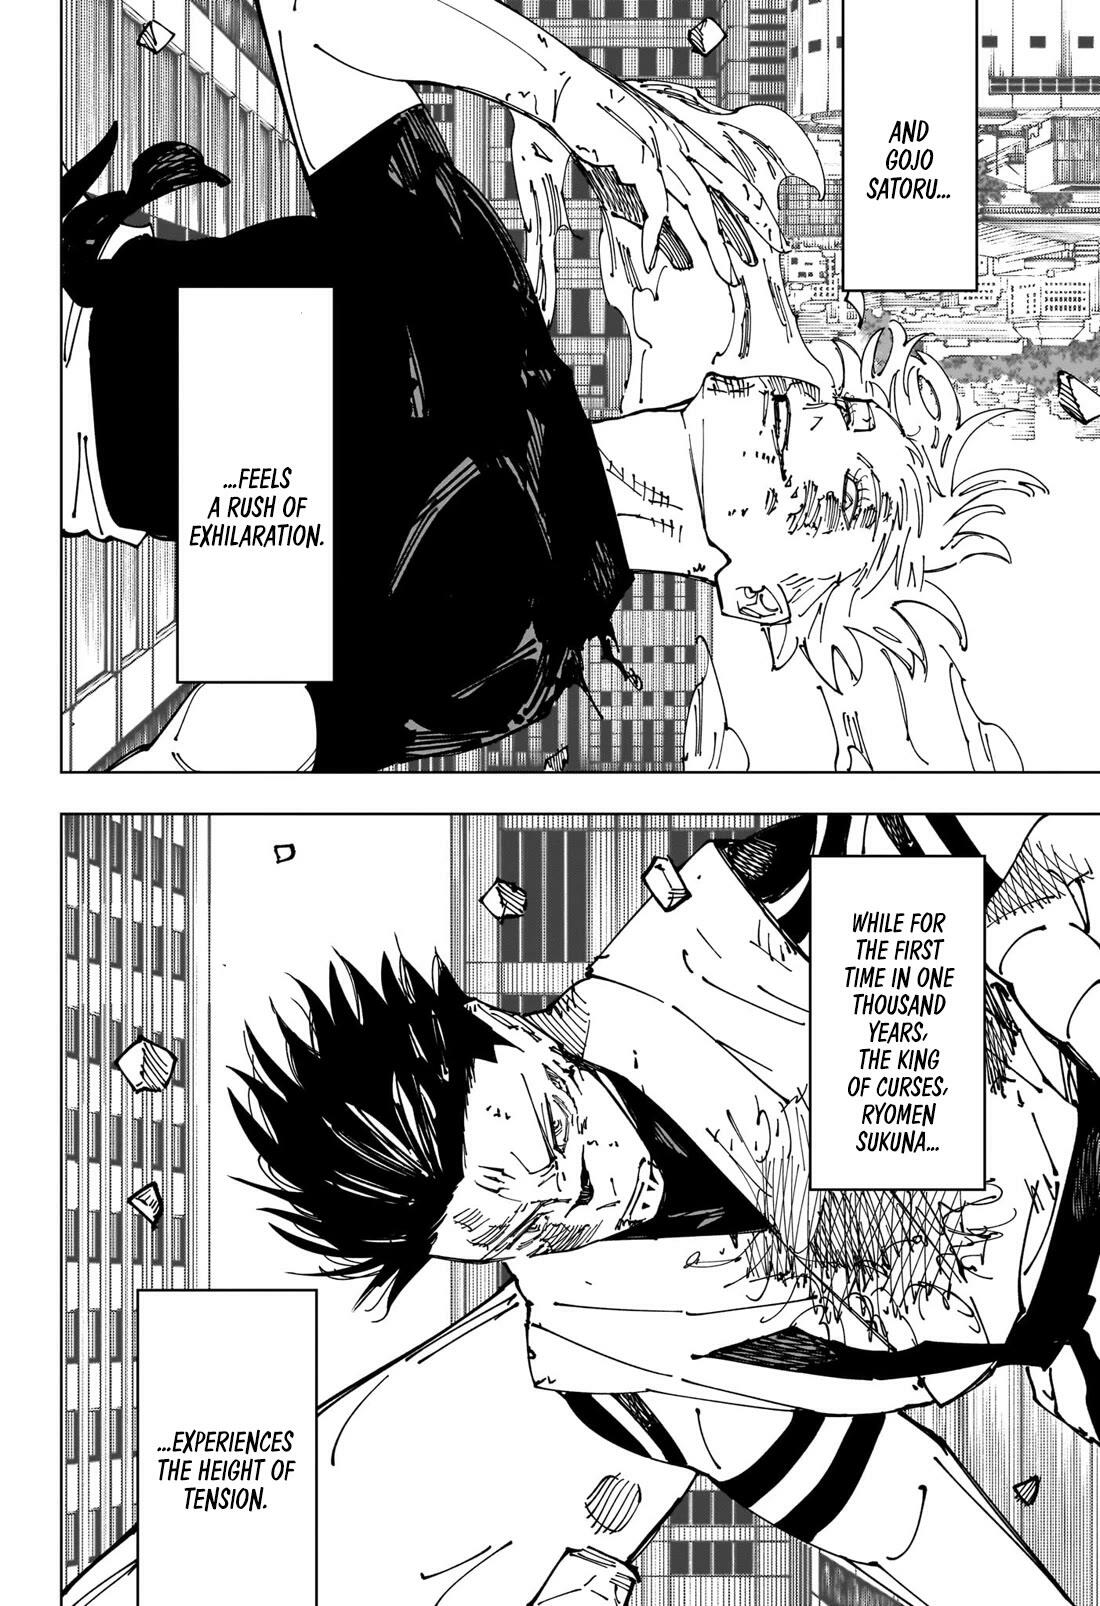 Jujutsu Kaisen Chapter 235: The Decisive Battle In The Uninhabited, Demon-Infested Shinjuku ⑬ page 3 - Mangakakalot